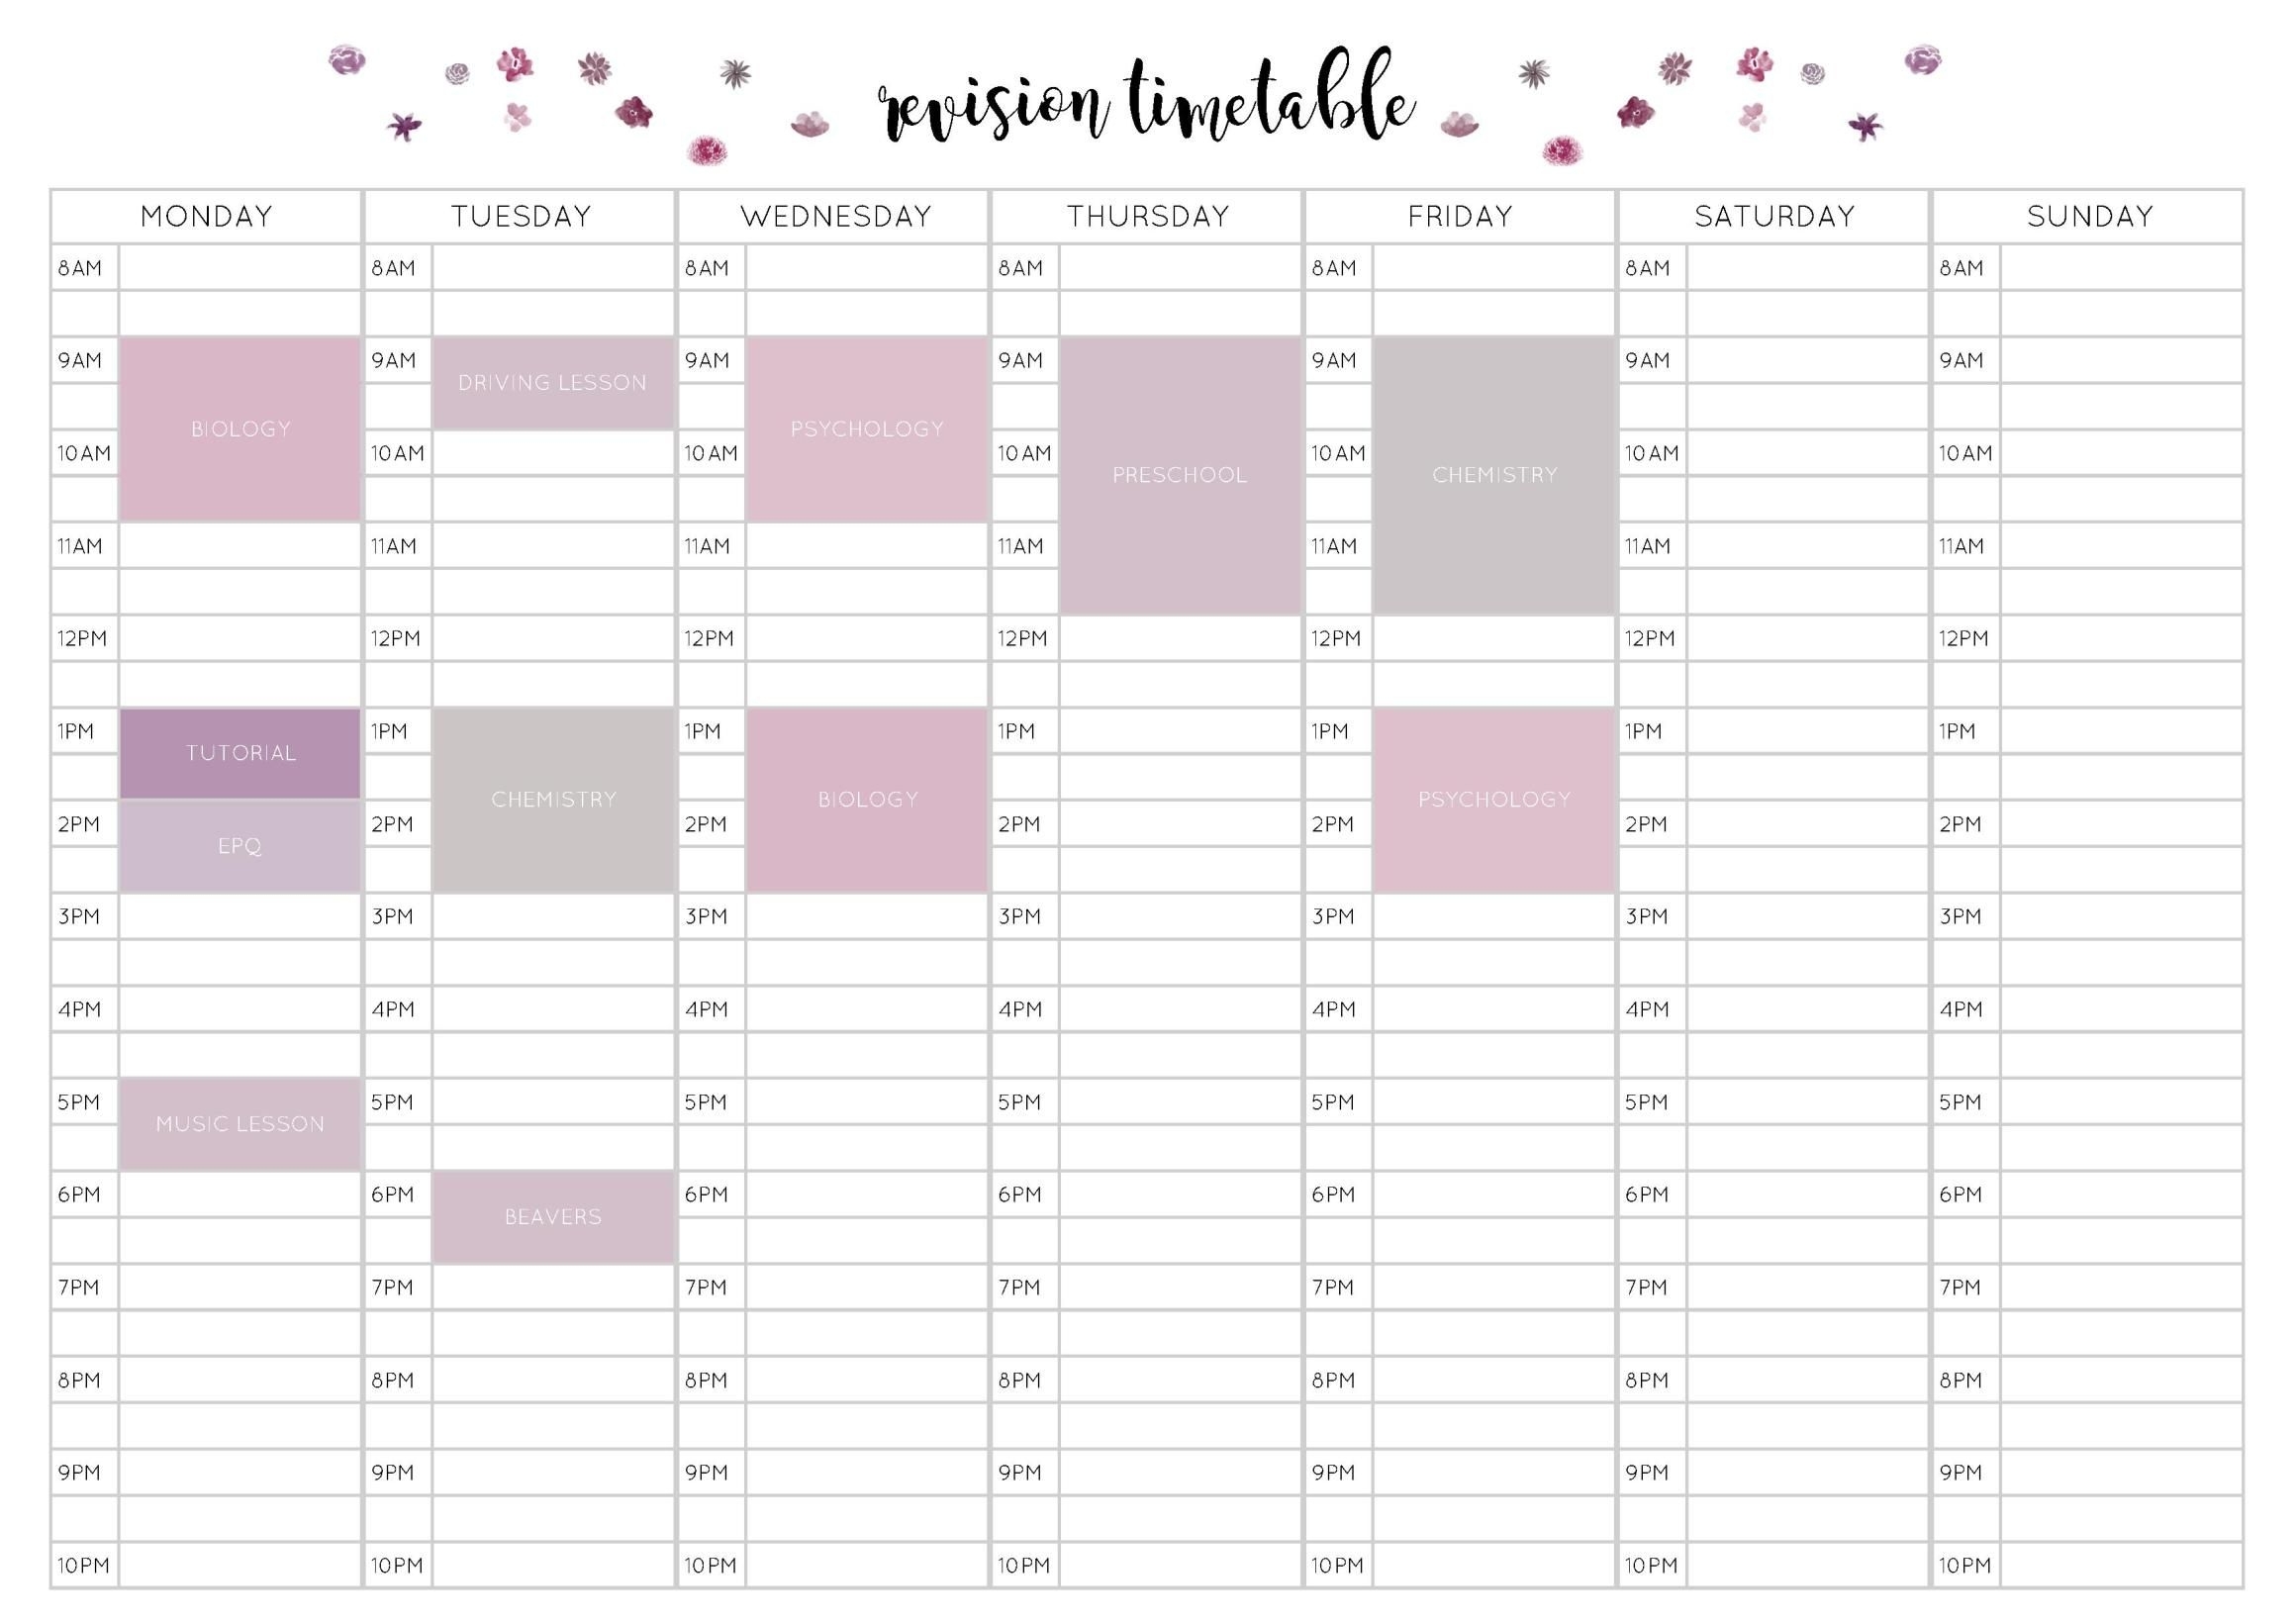 Free Revision Timetable Printable – Emily Studies | Revision